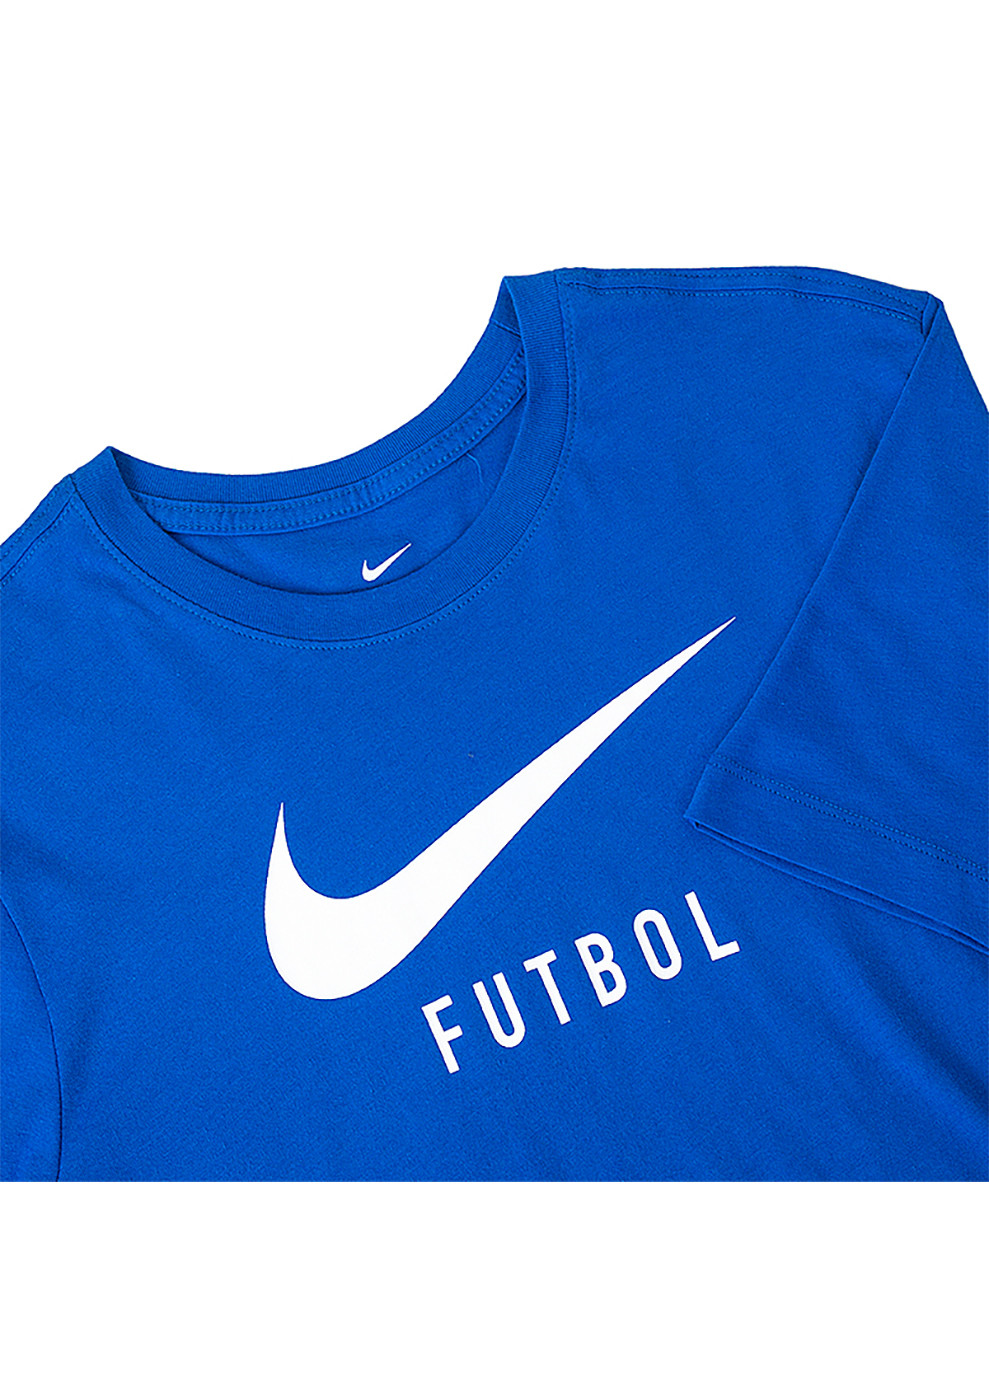 Синяя мужская футболка m nk swsh ftbl sccr tee синий s (dh3890-480 s) Nike